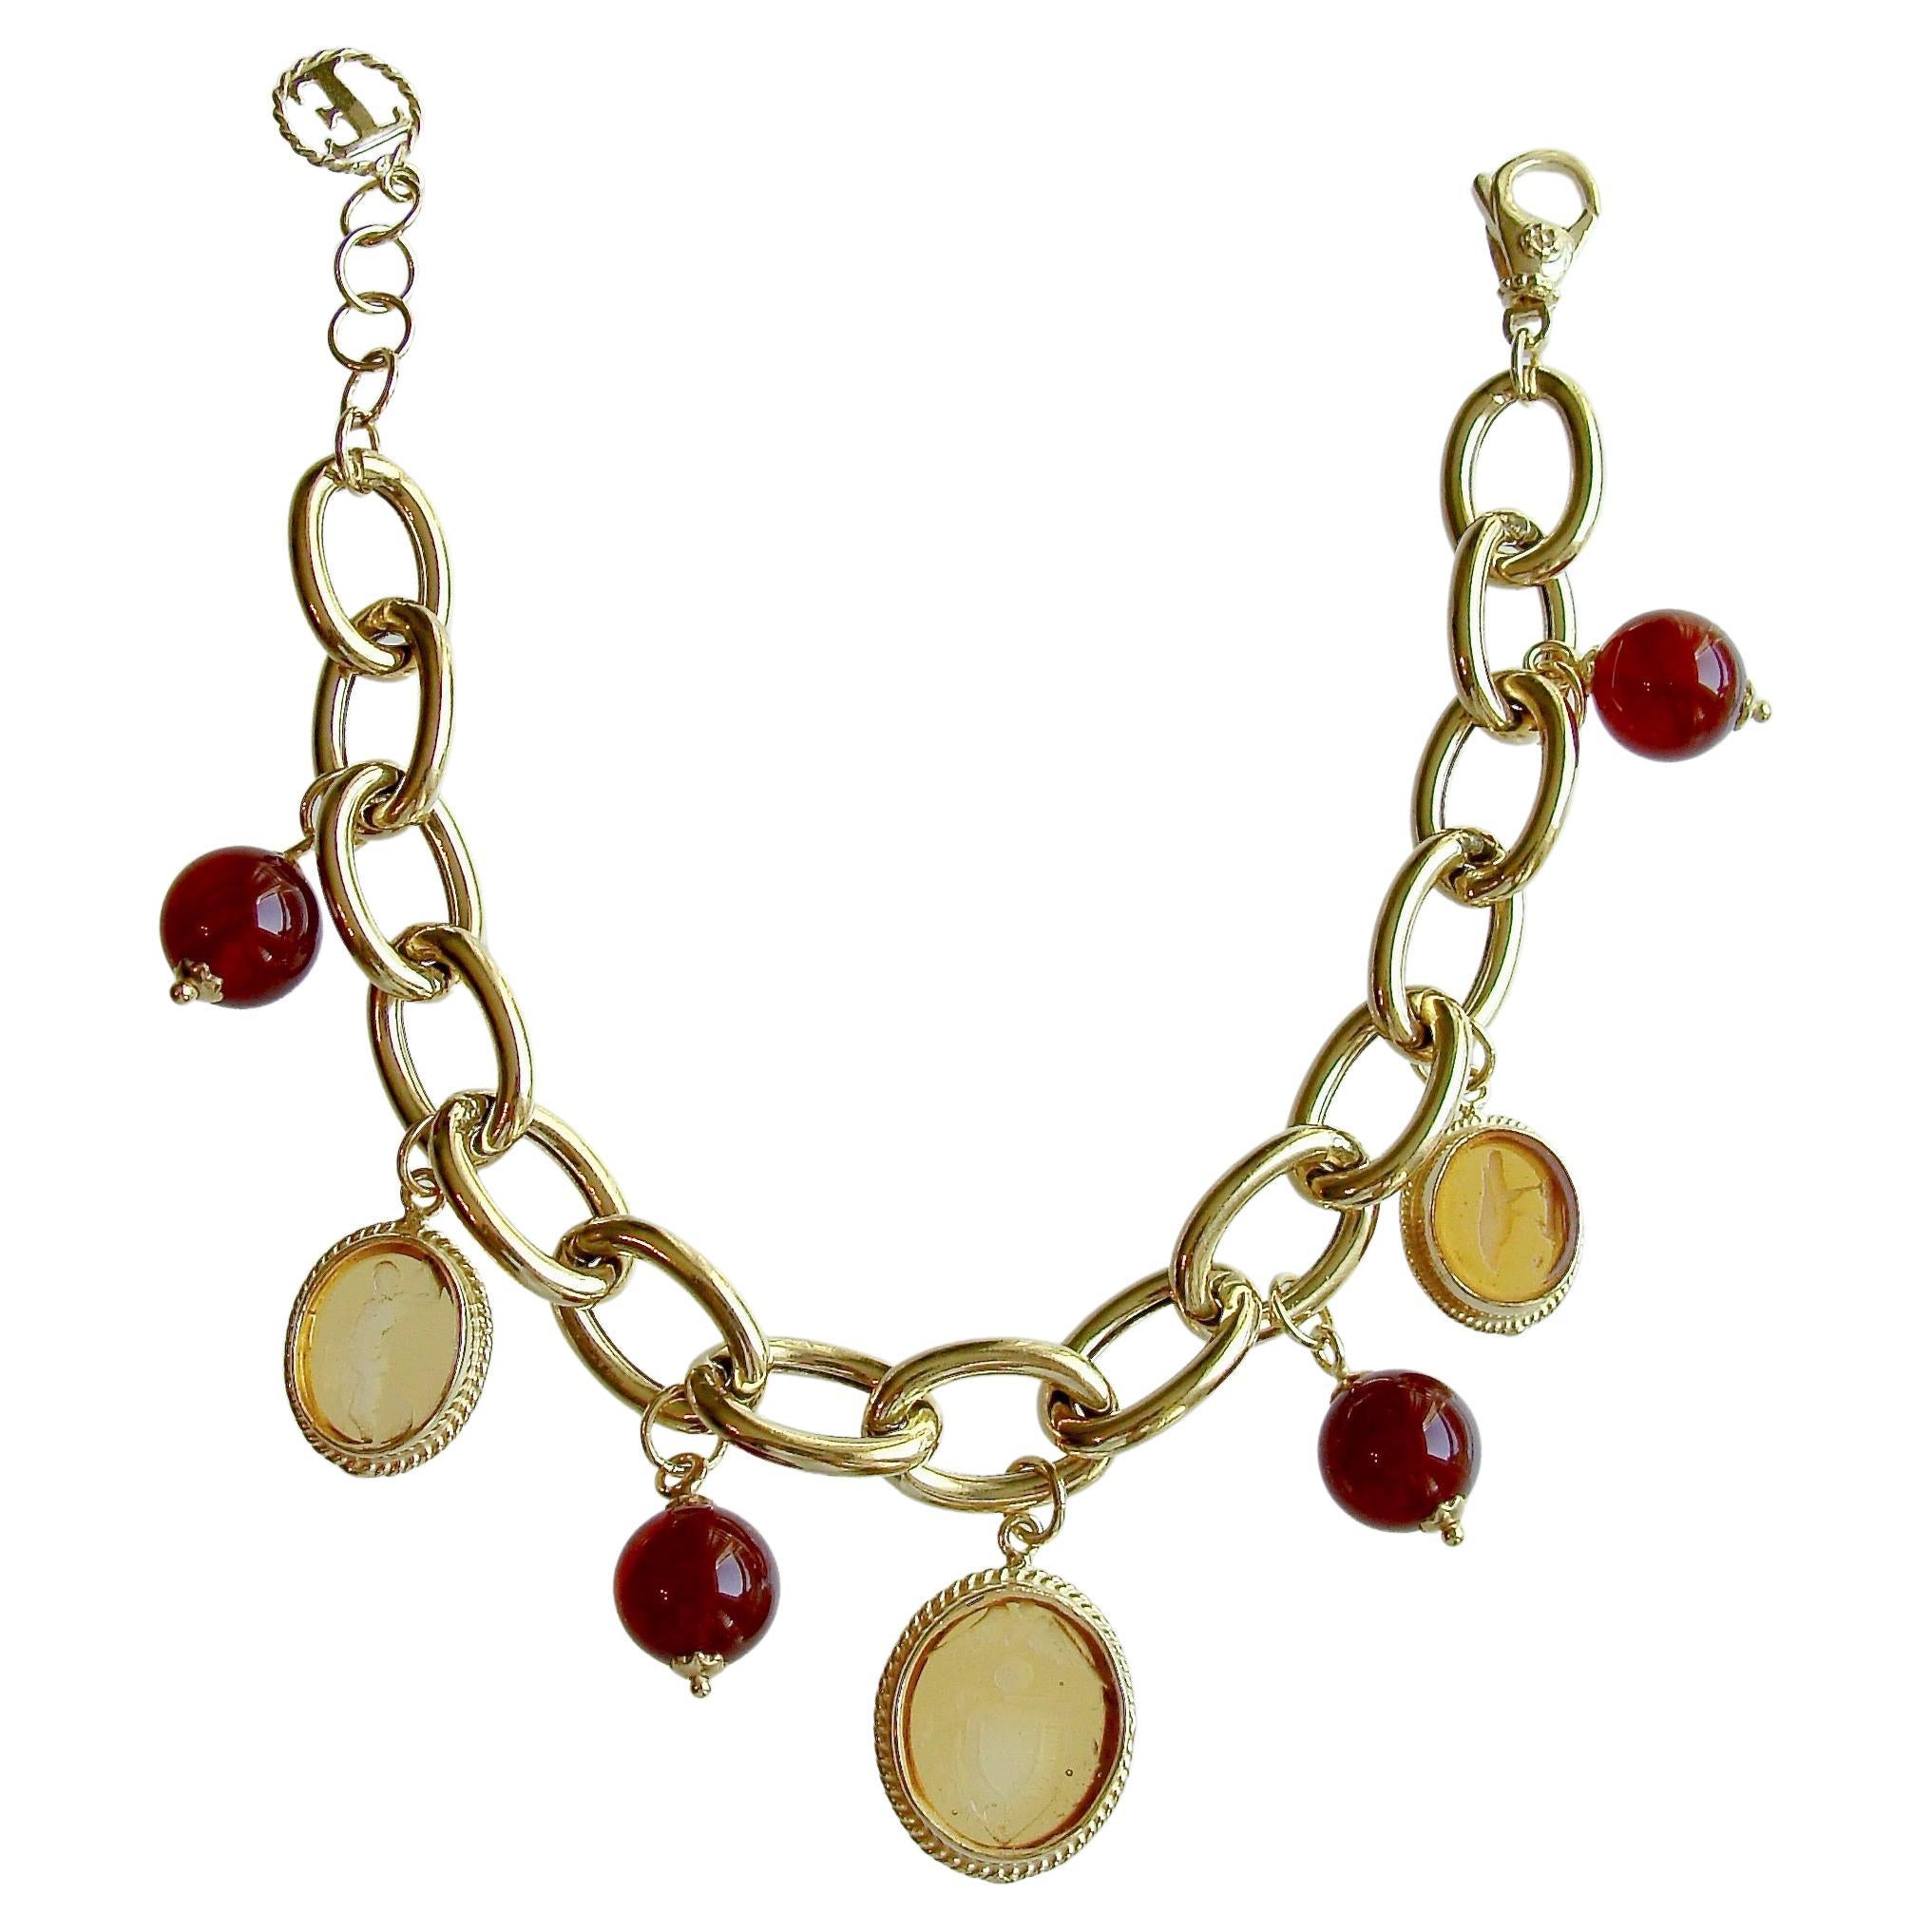 Gold Intaglios and Carnelian Charm Bracelet with Adjustable Clasp - Piedmont Bra For Sale